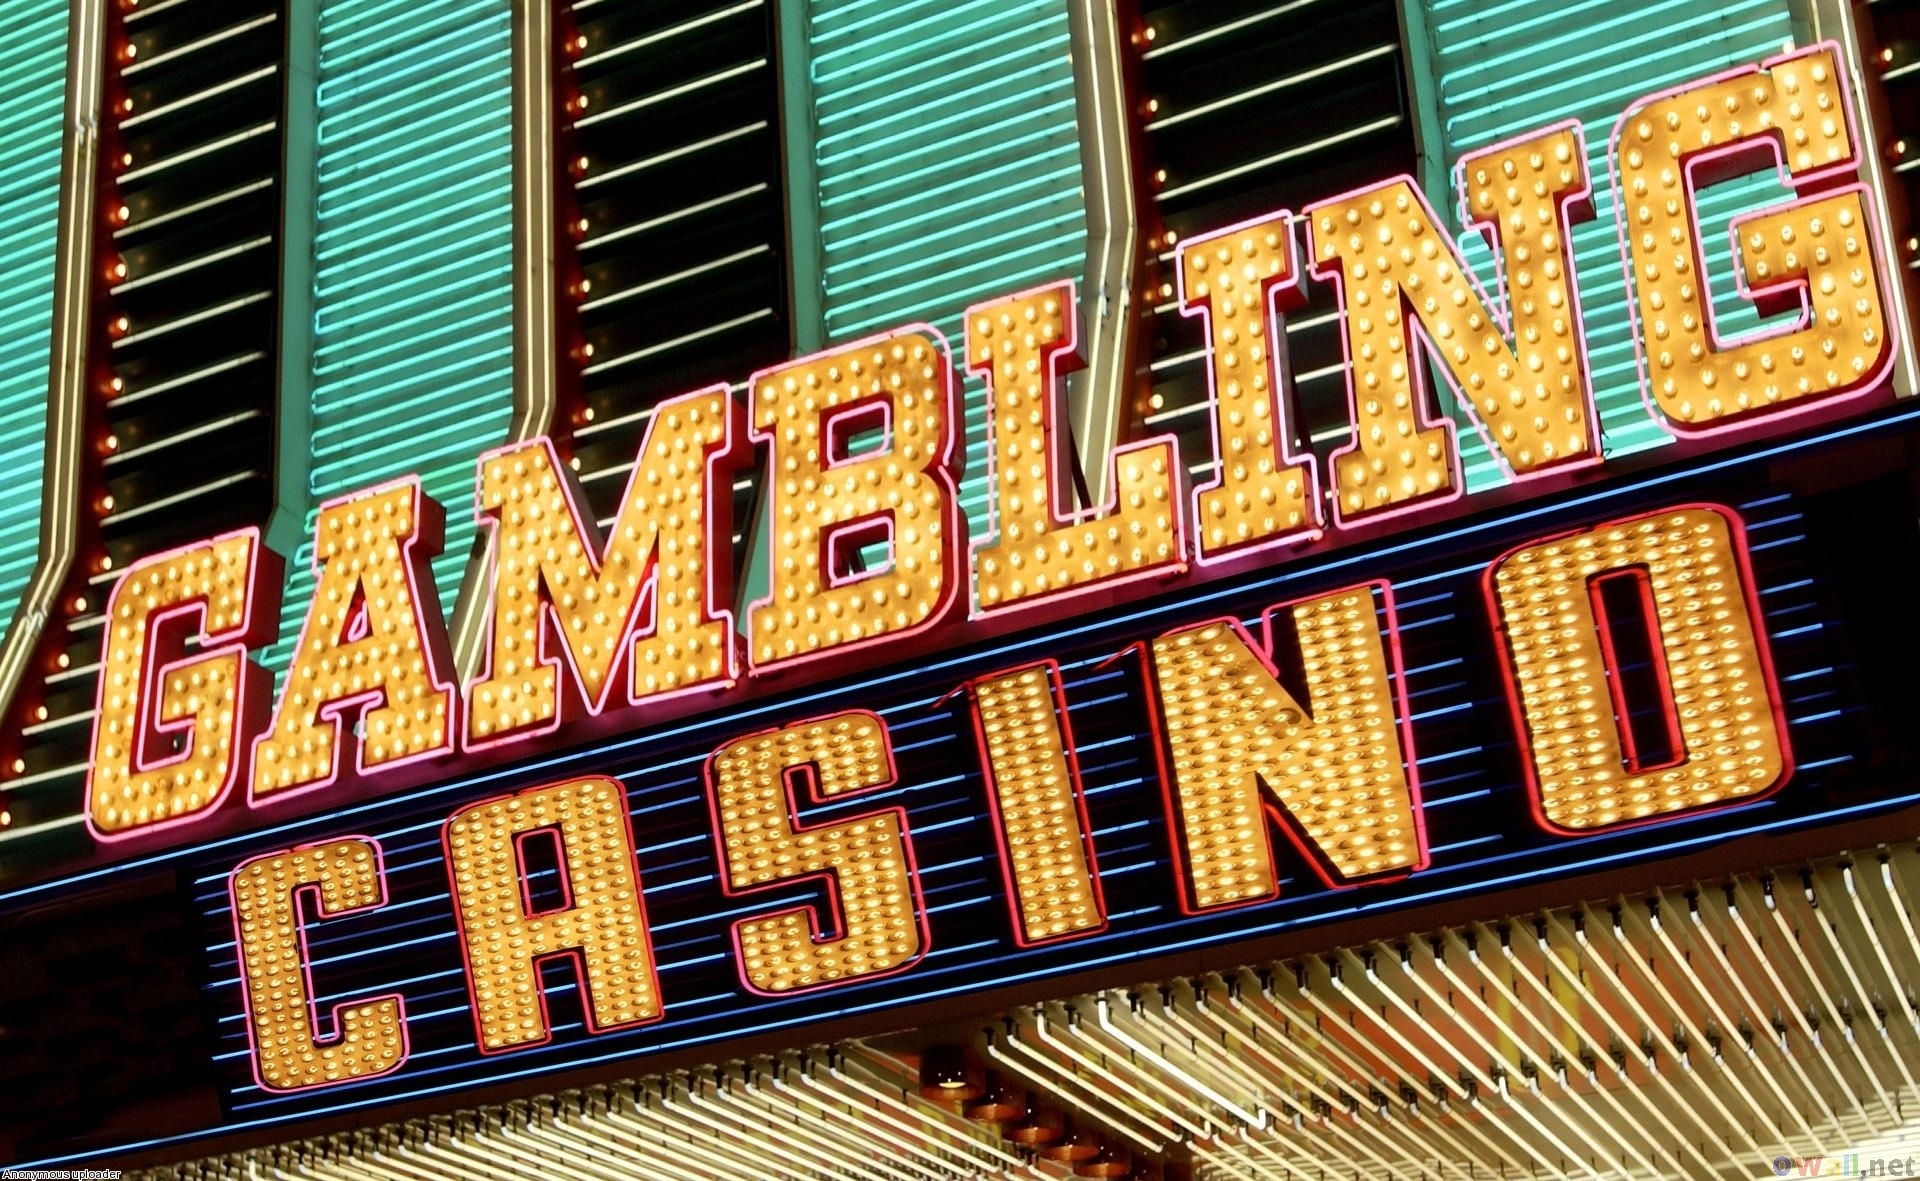 gambling casinos in texas